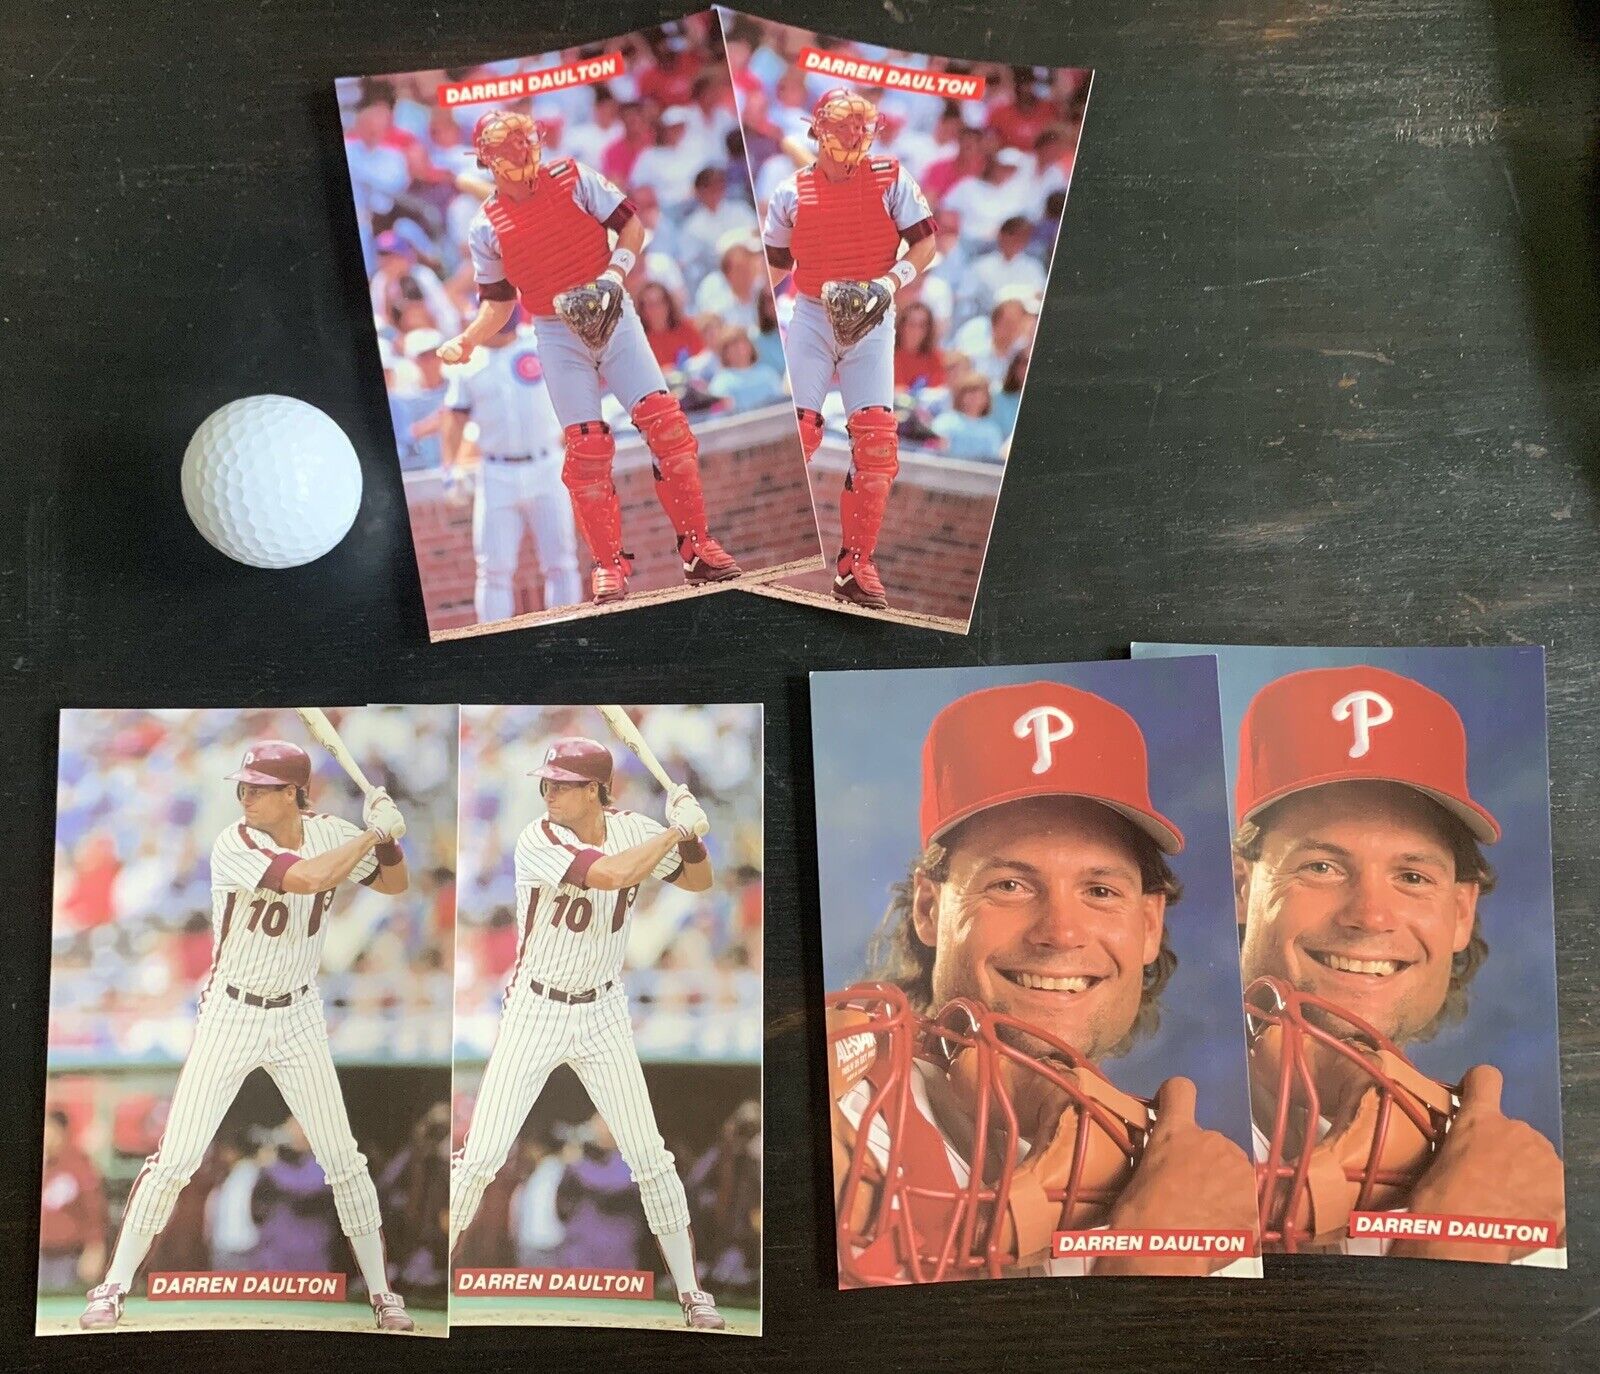 Darren Daulton Baseball Photos. Philadelphia Phillies. 6 Total